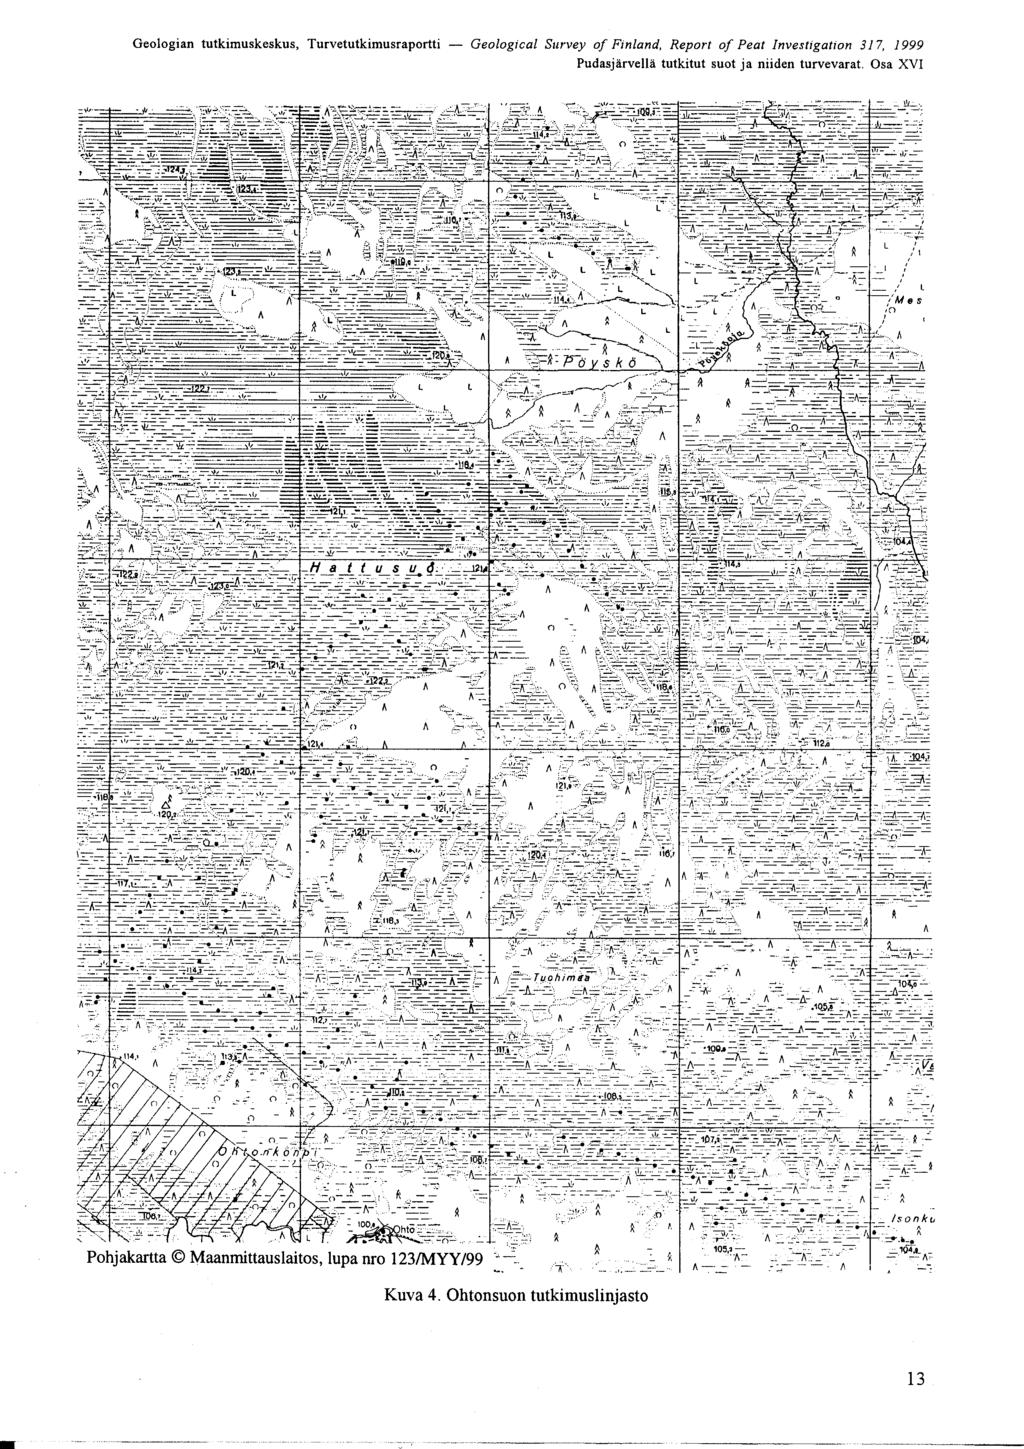 Geologian tutkimuskeskus, Turvetutkimusraportti - Geological Survey of Finland, Report of Peat nvestigation 37, 999 Pudasjärvellä